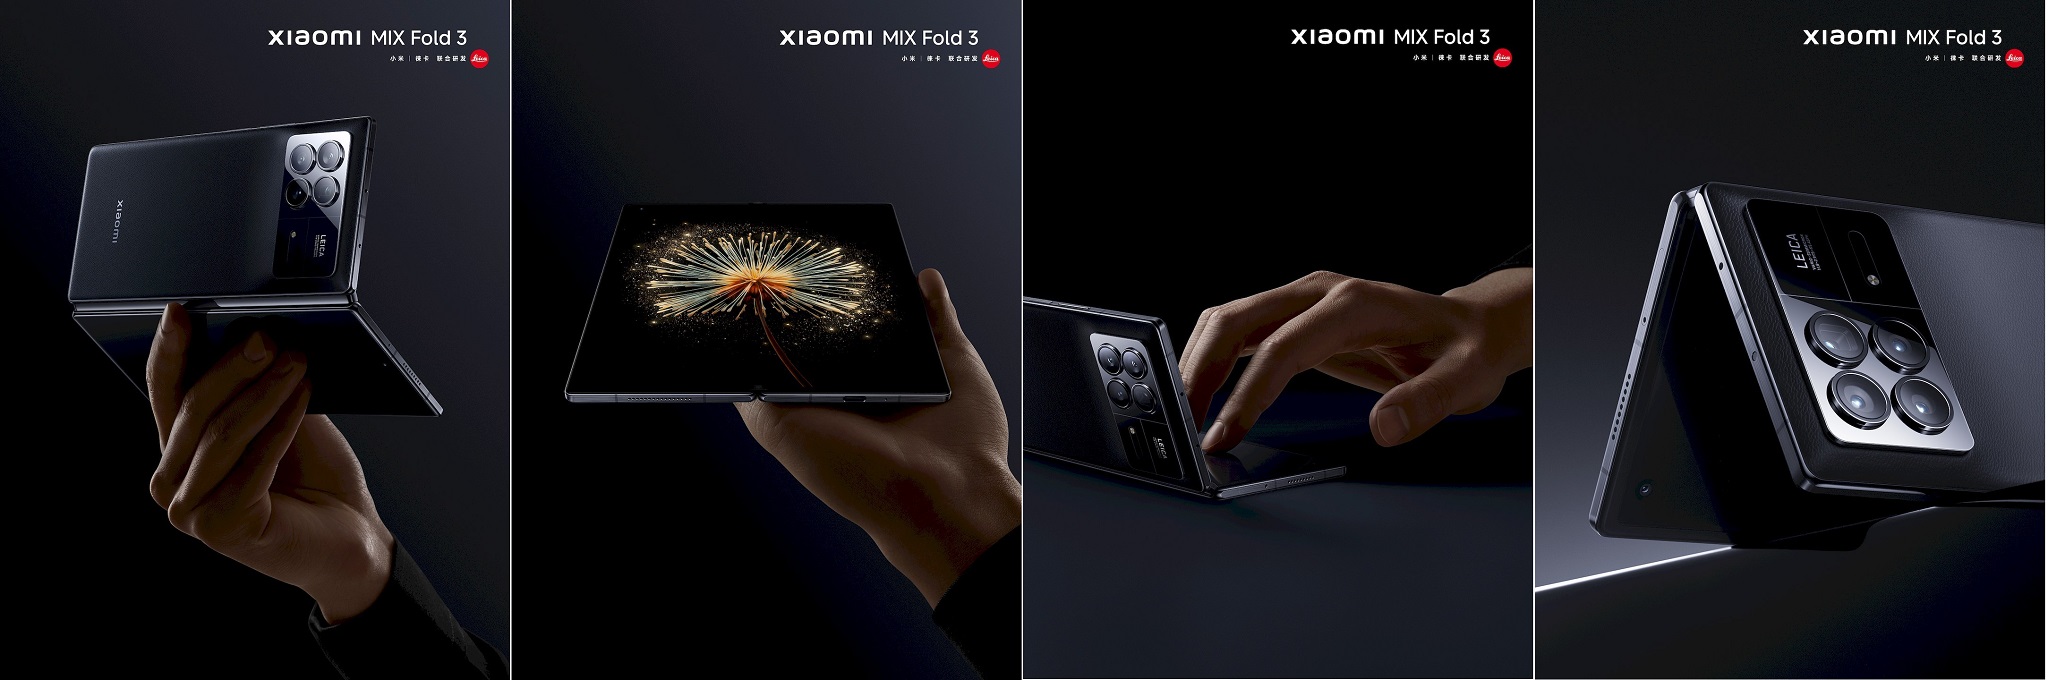 Xiaomi-Mix-Fold-3---hinh-anh-3.jpg